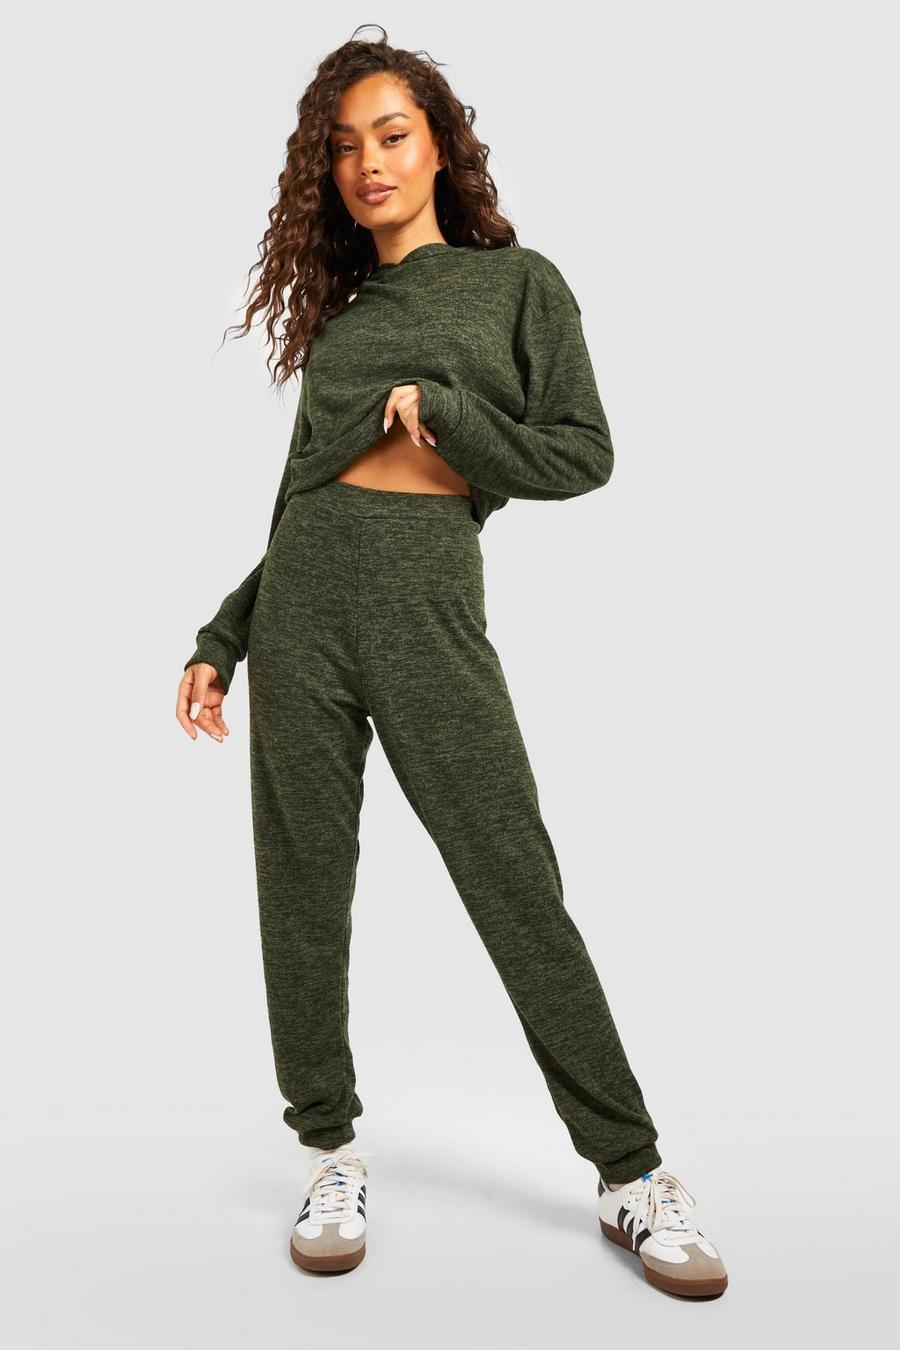 Khaki Melange Knitted Hoody And Track Pants Co-Ord Set